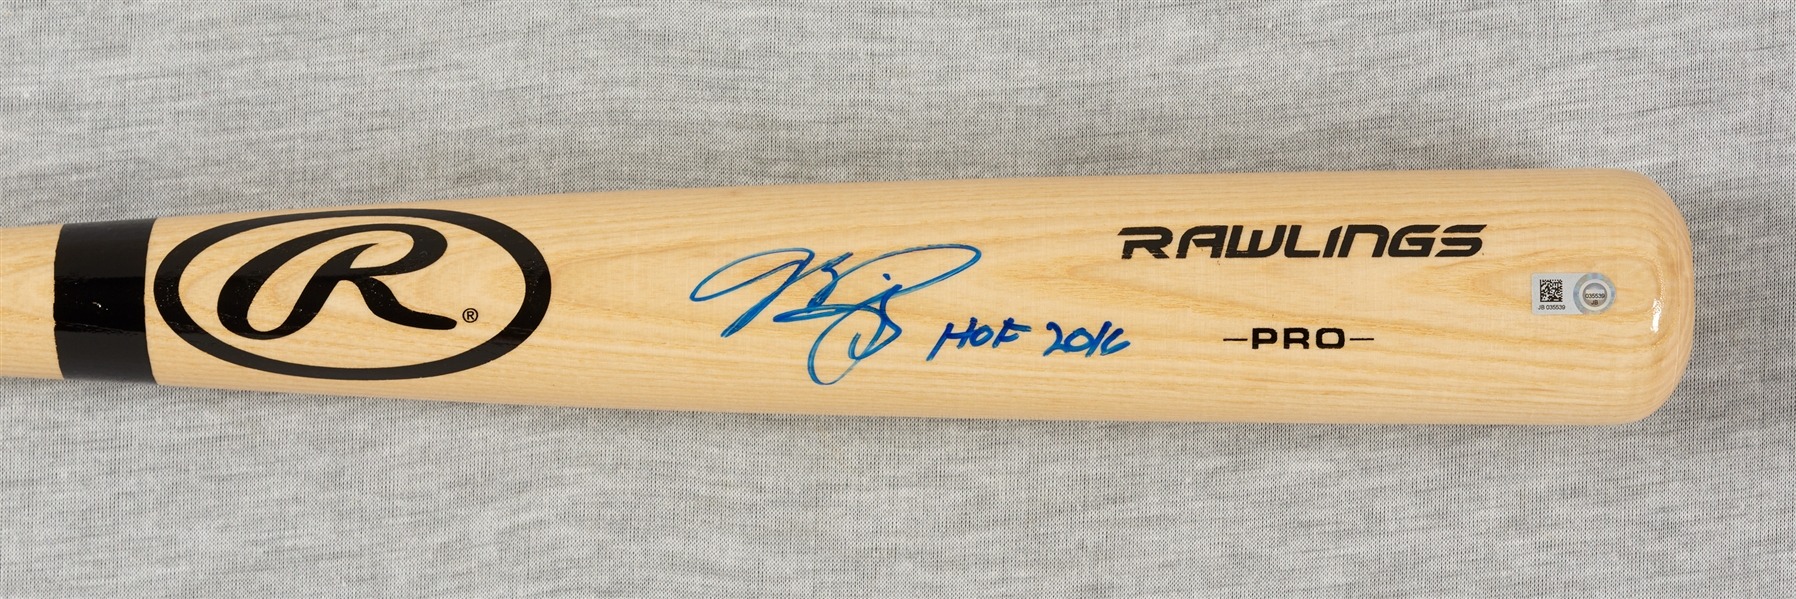 Mike Piazza Signed Rawlings Bat HOF 2016 (MLB)